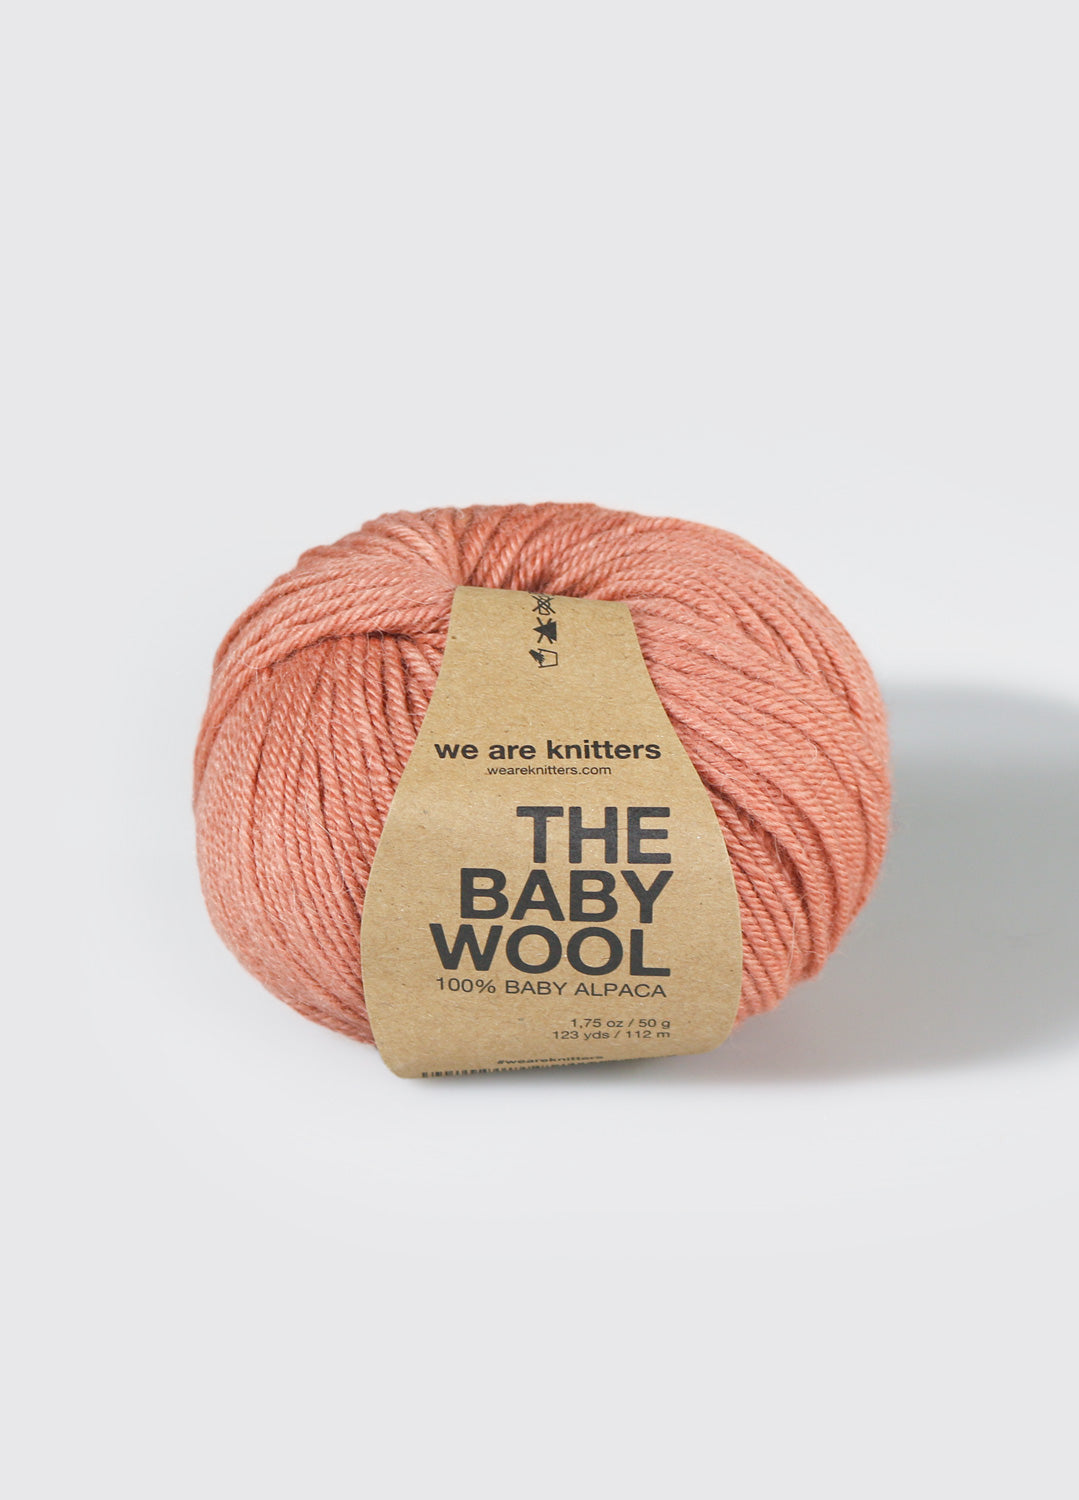 Valley Yarns Superwash Sport - Denim (25) 50g (1.8oz) 100% Merino Wool